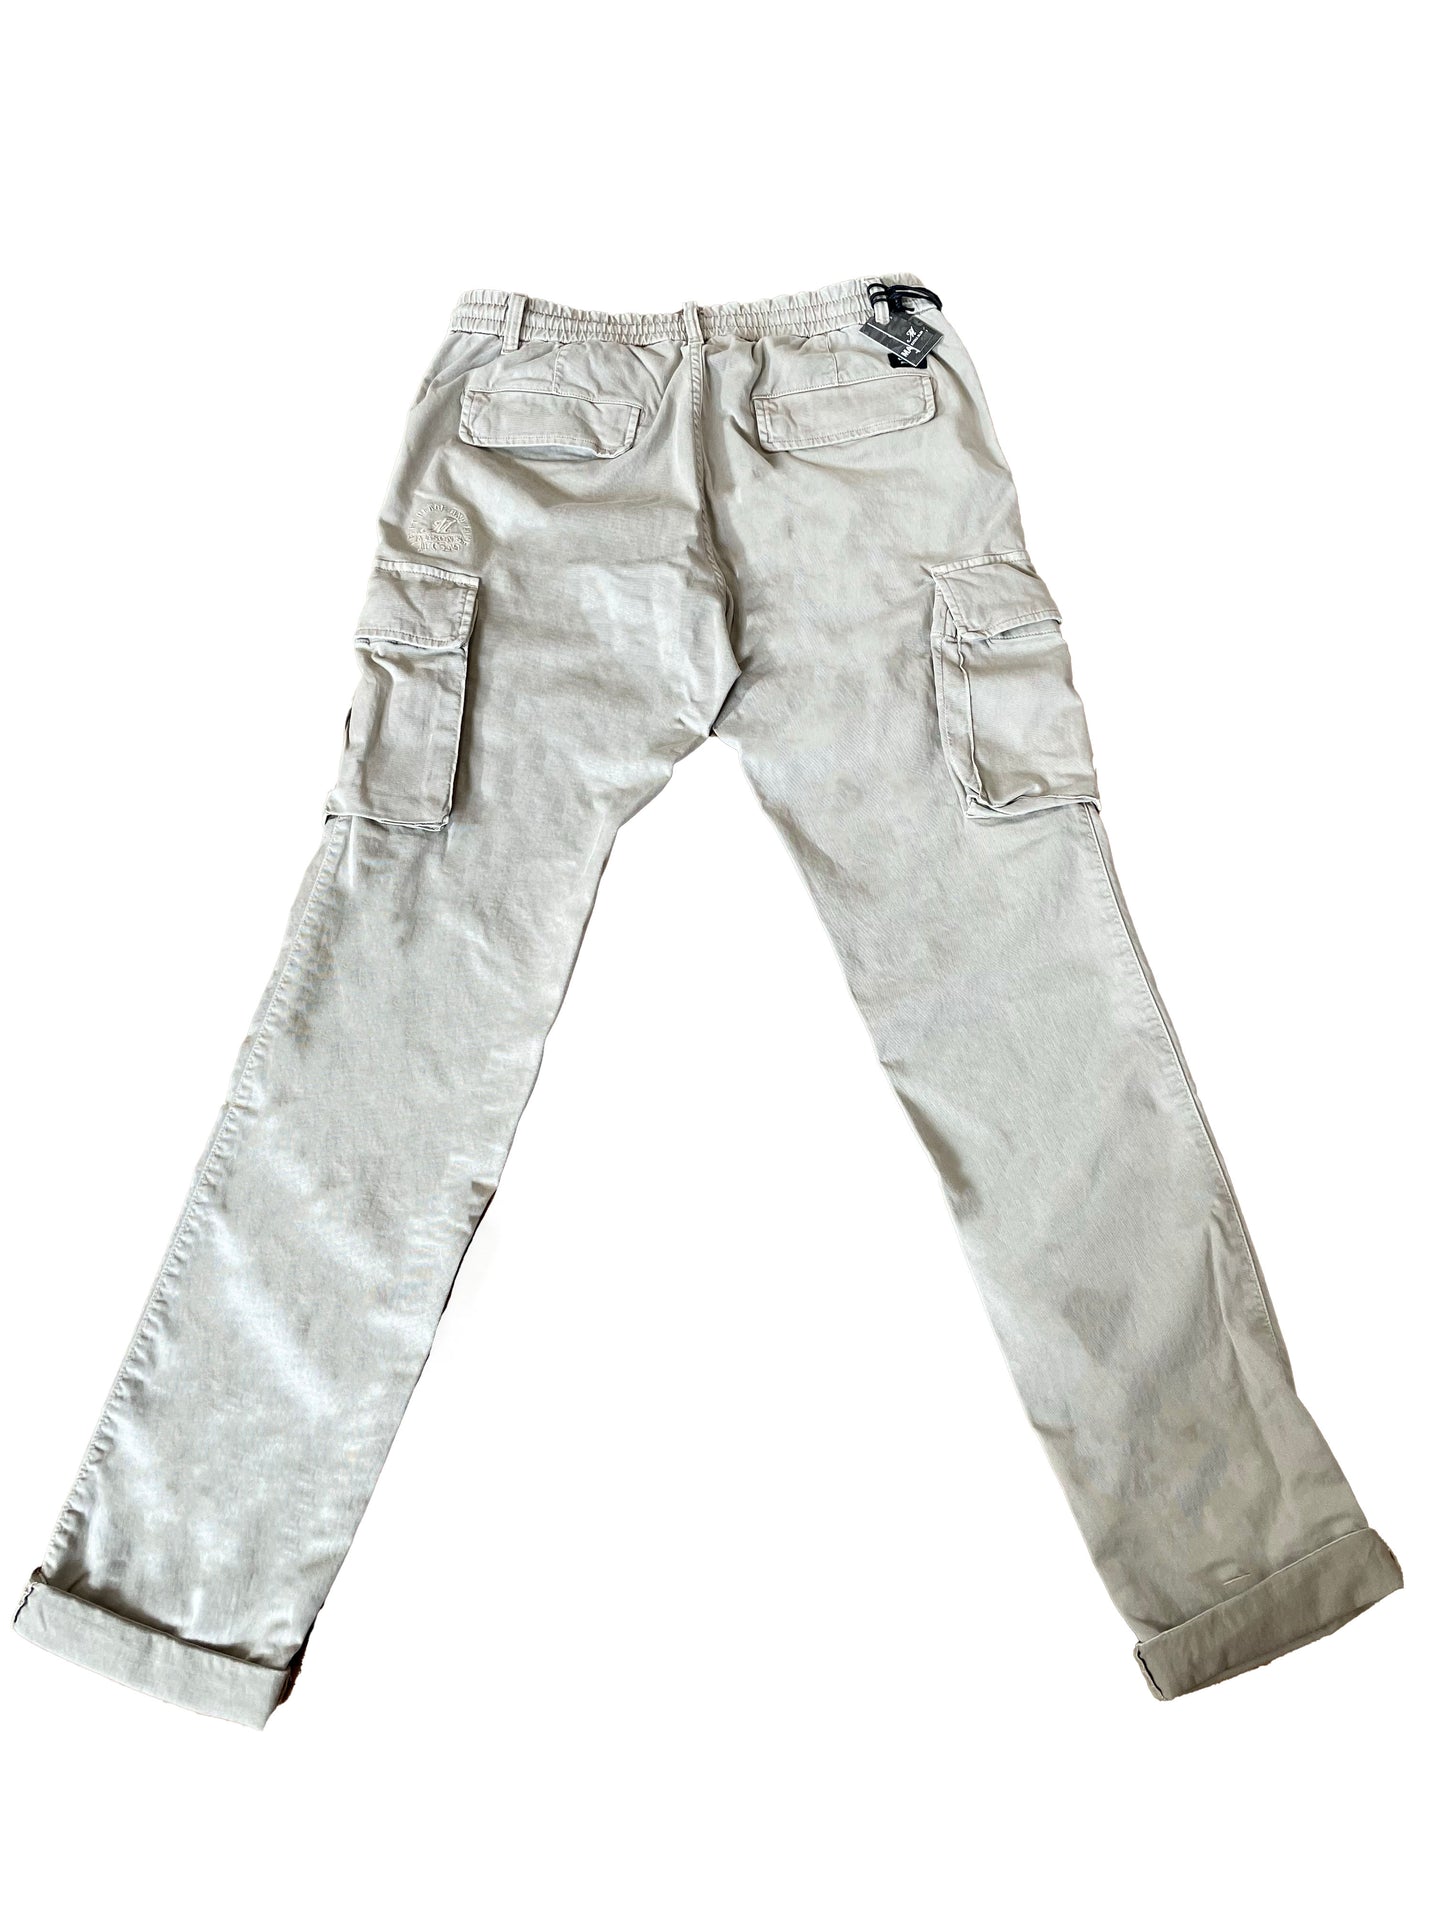 Masons Khaki Cargo Pants